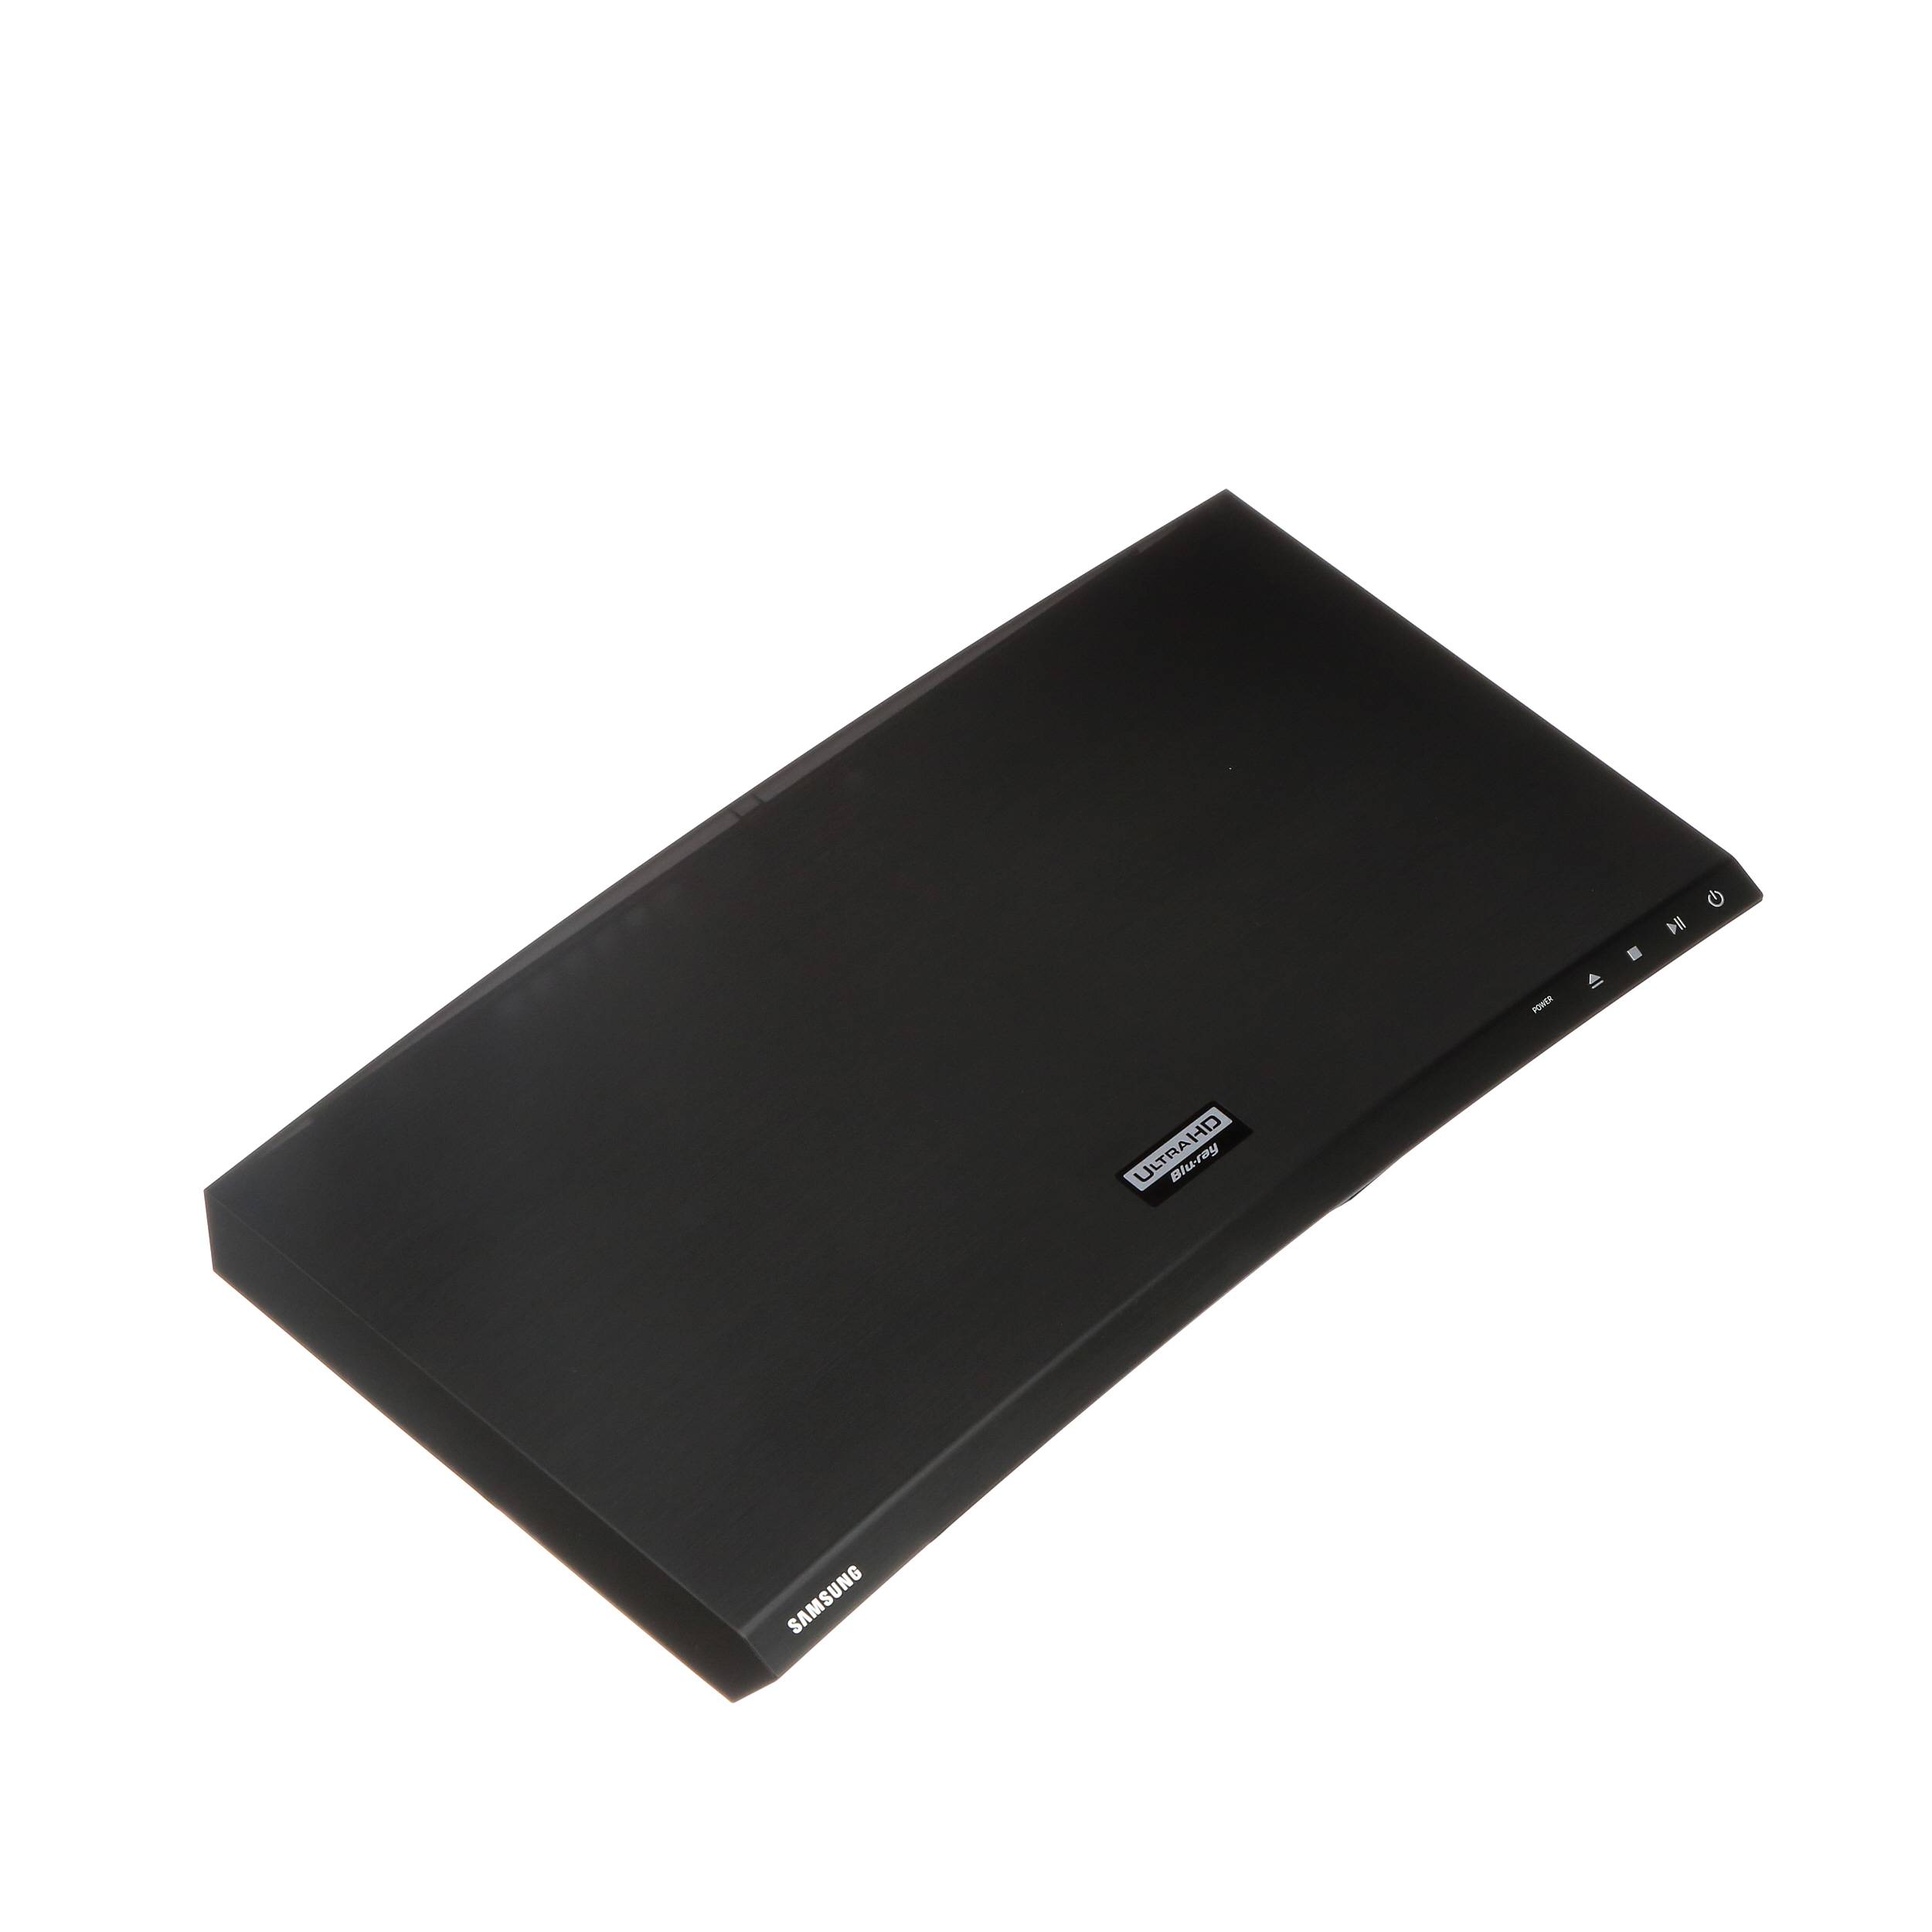 Samsung Electrónica UBD-M9700/ZA 4K UHD Reproductor de Blu-Ray